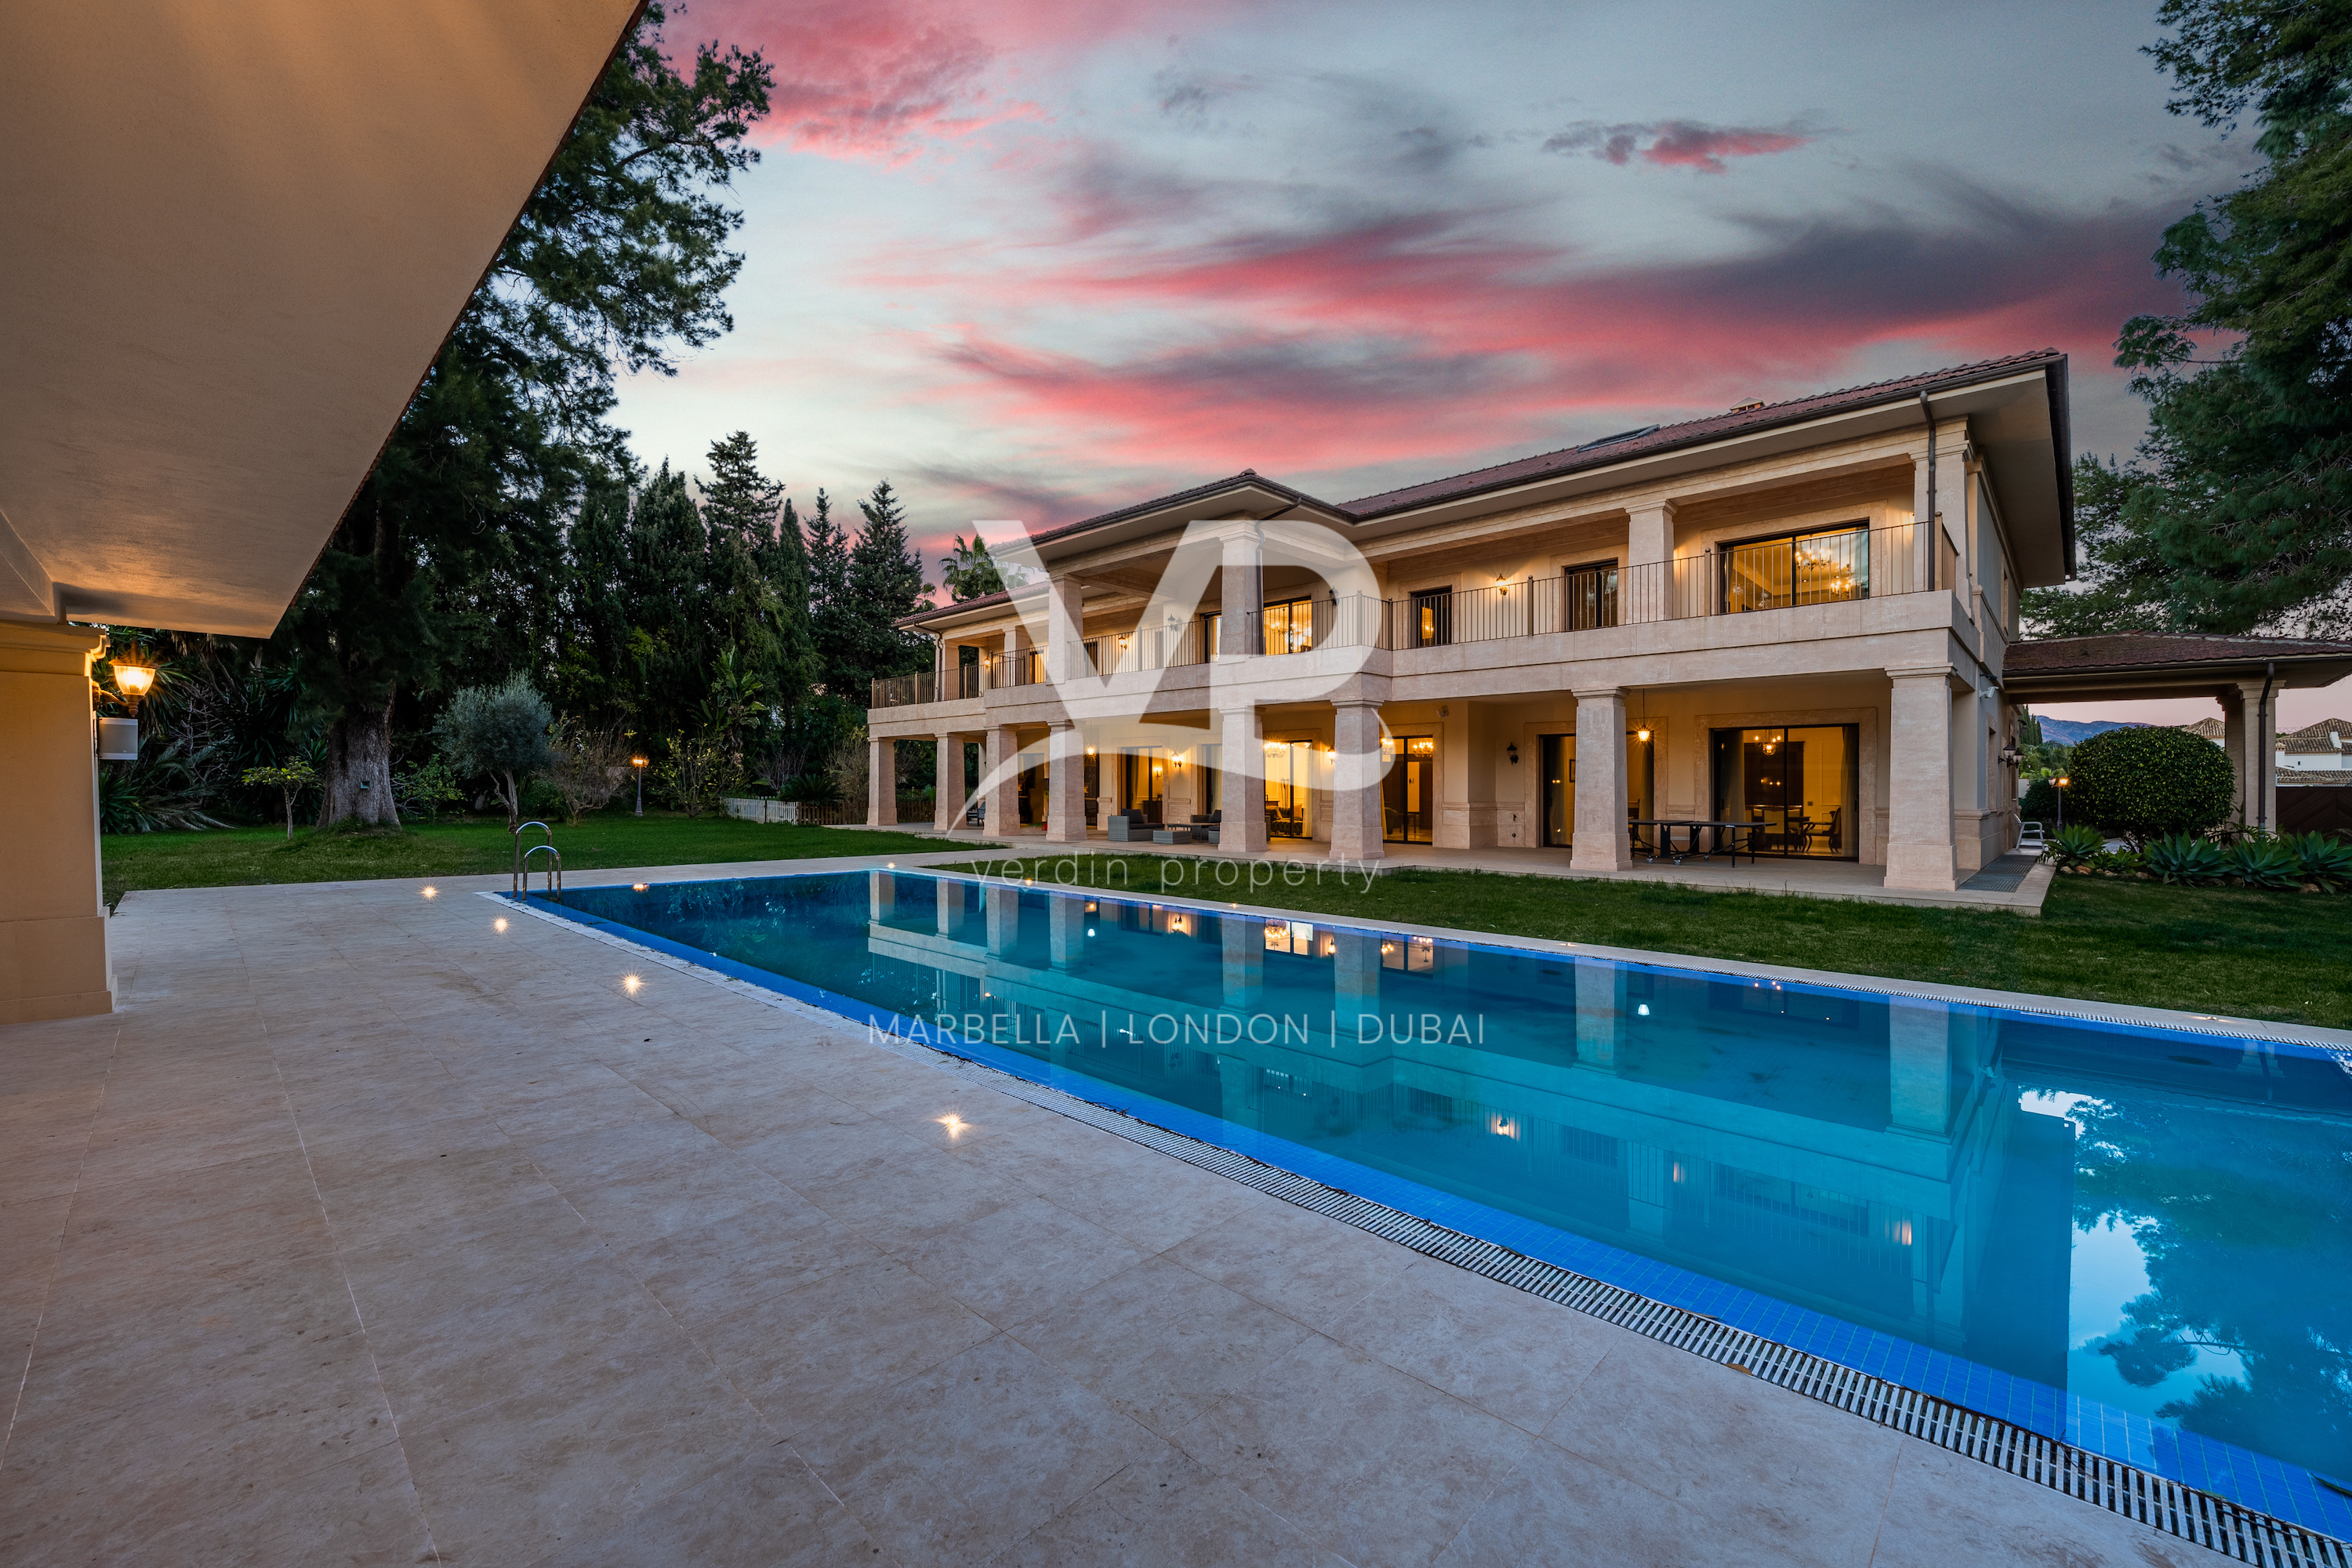 Villa Sorrento Marbella - Verdin Property